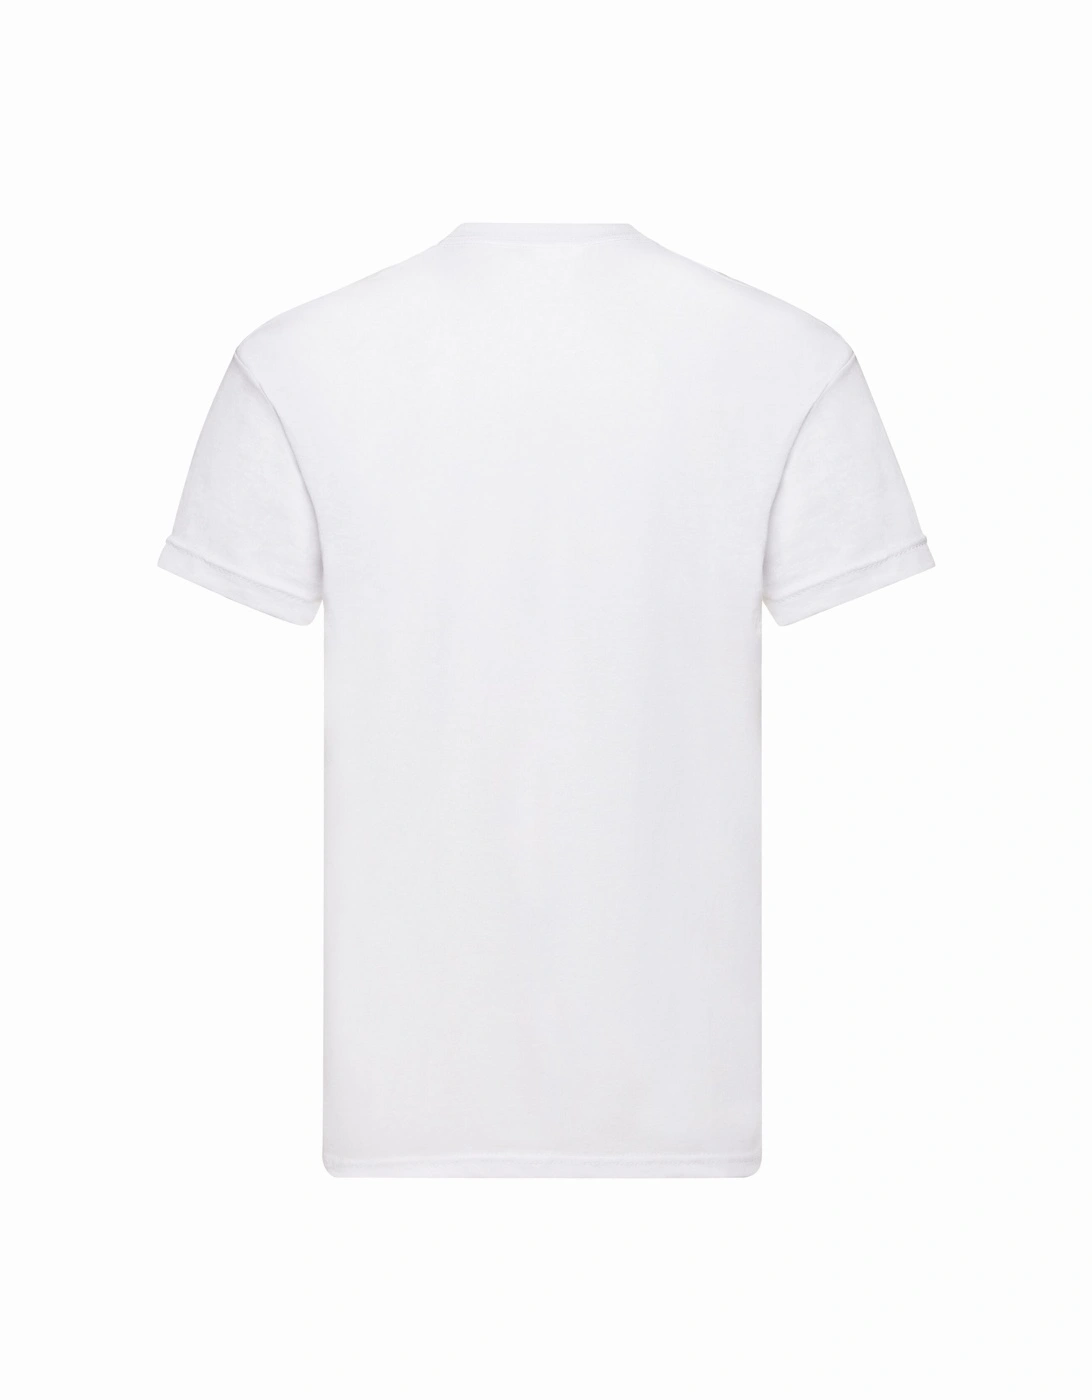 Unisex Adult Value T-Shirt